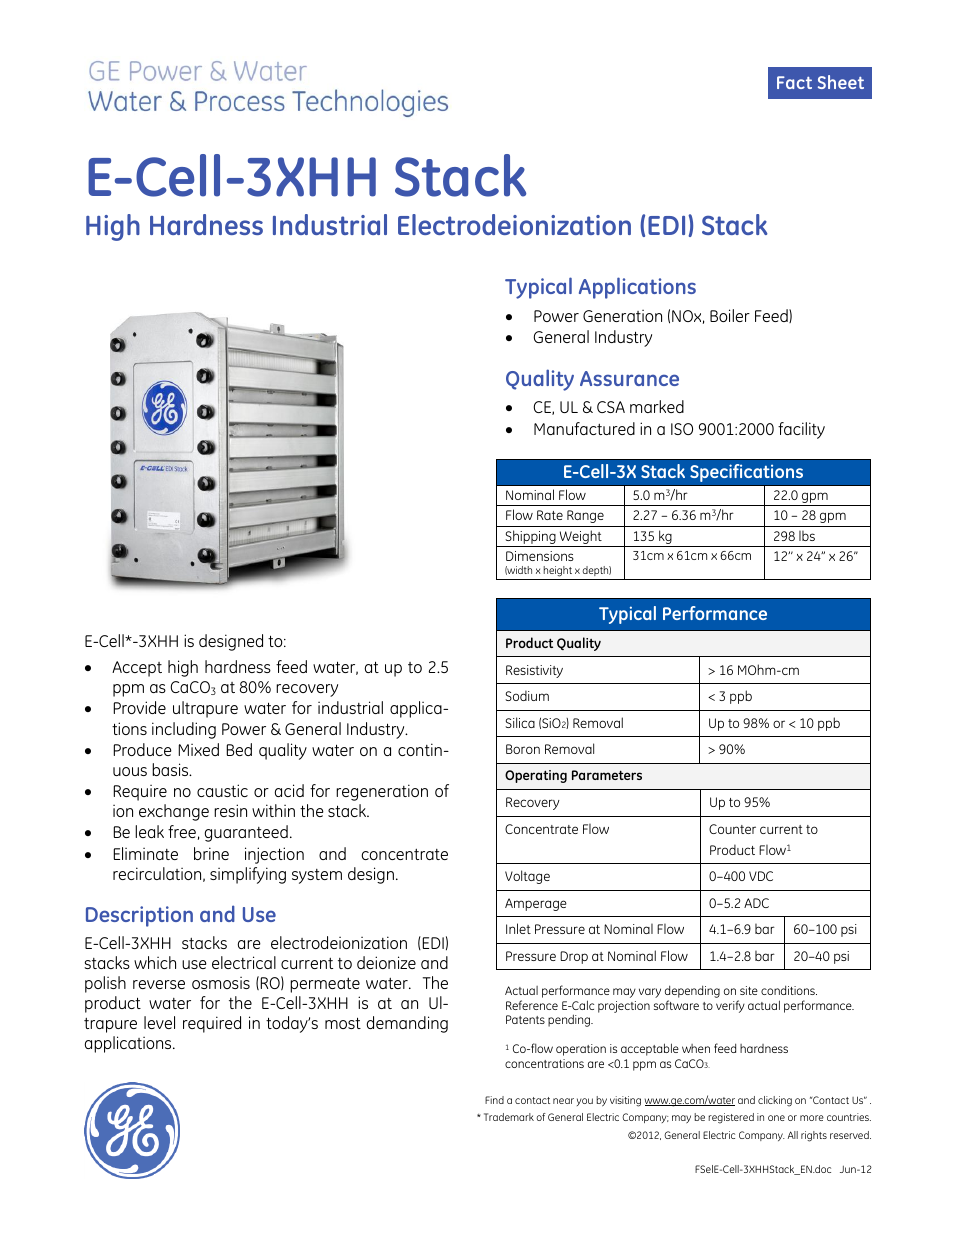 Electrodeionization (EDI) - E-Cell-3X HH Stack